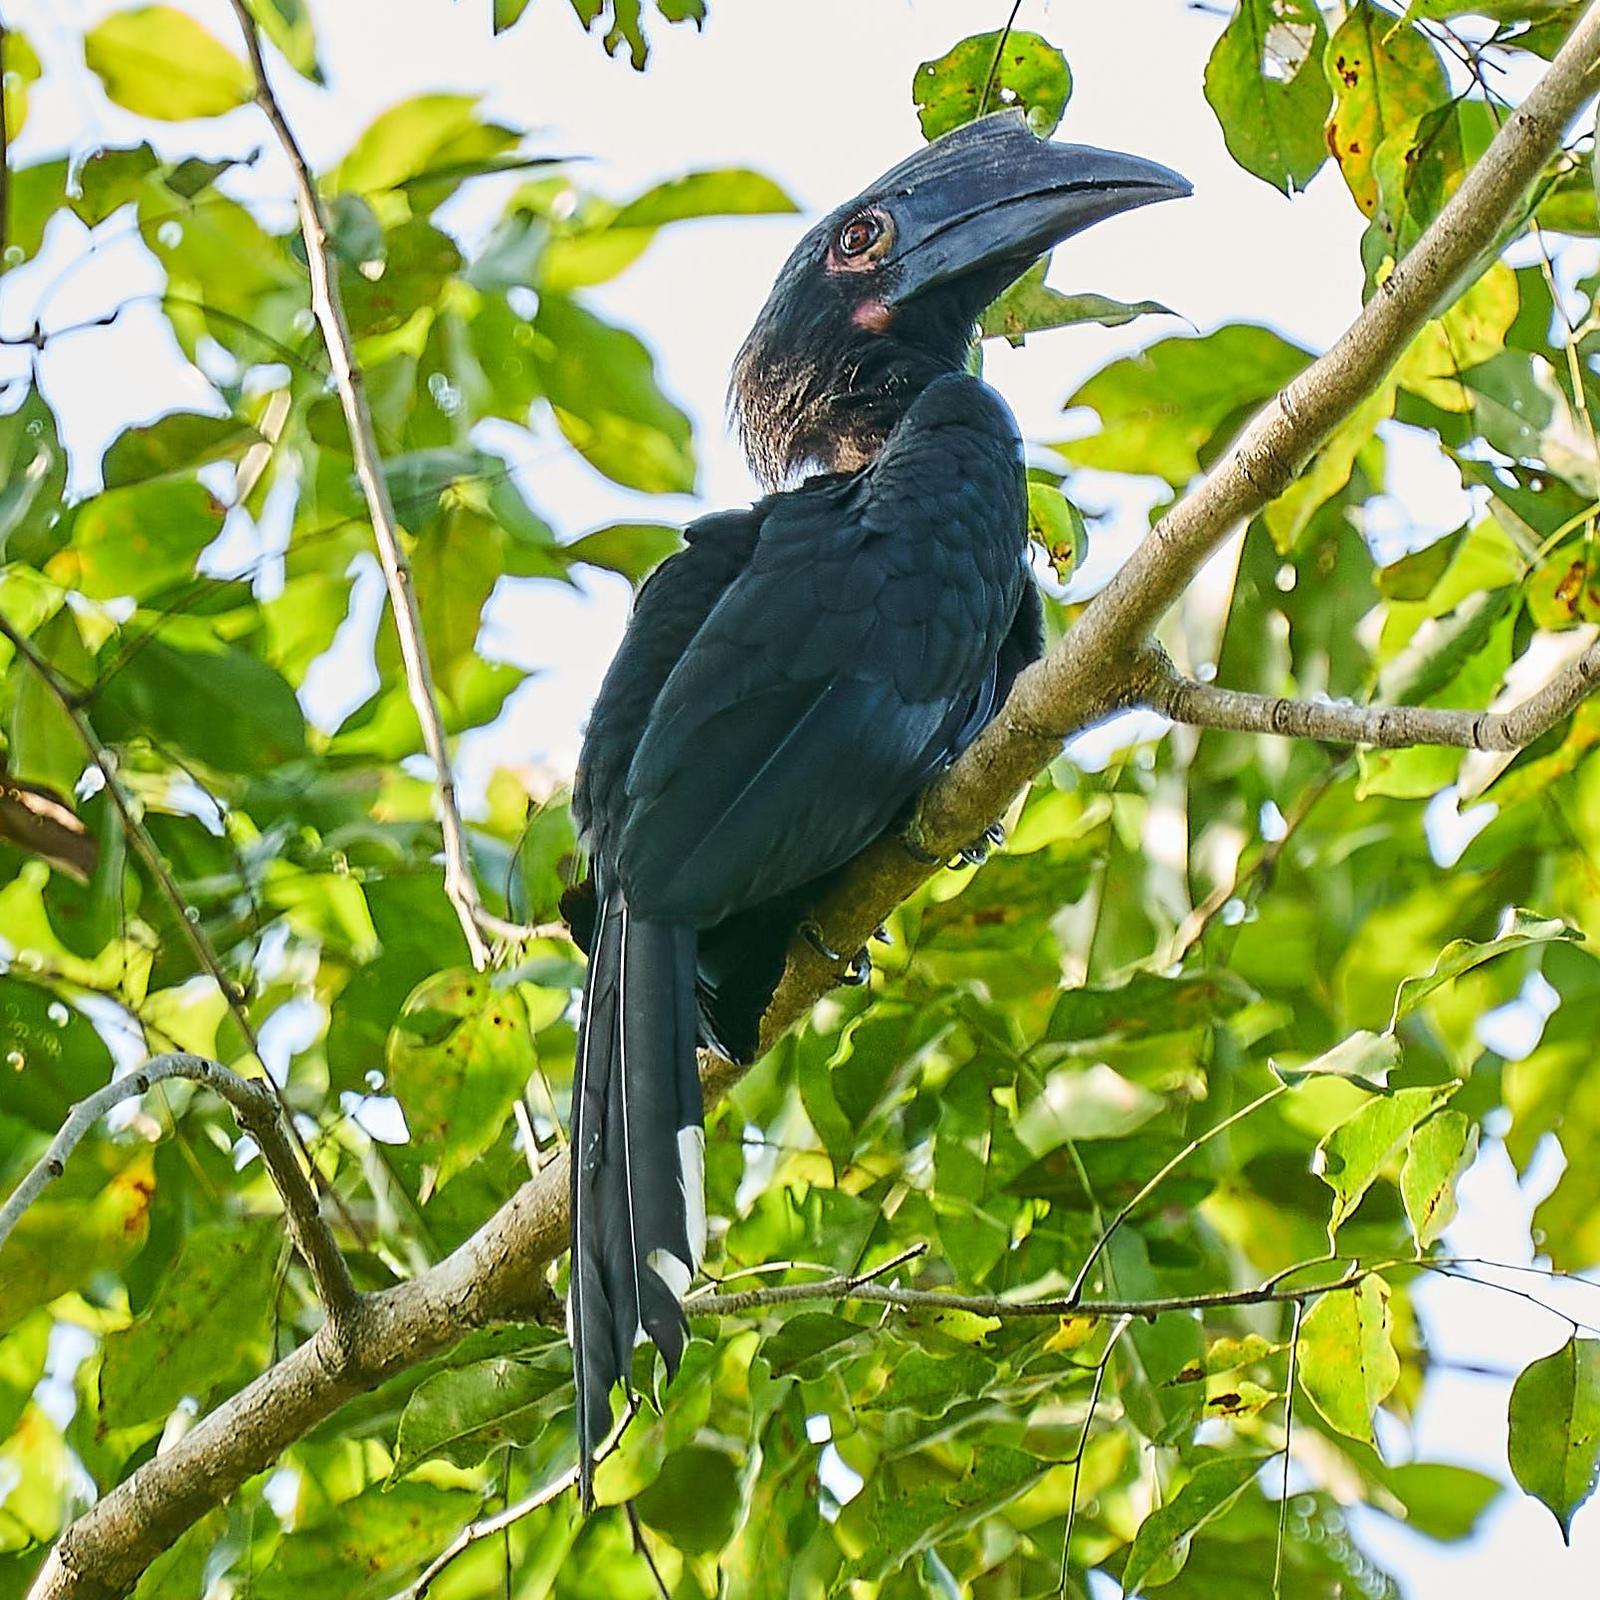 Black Hornbill Photo by Steven Cheong